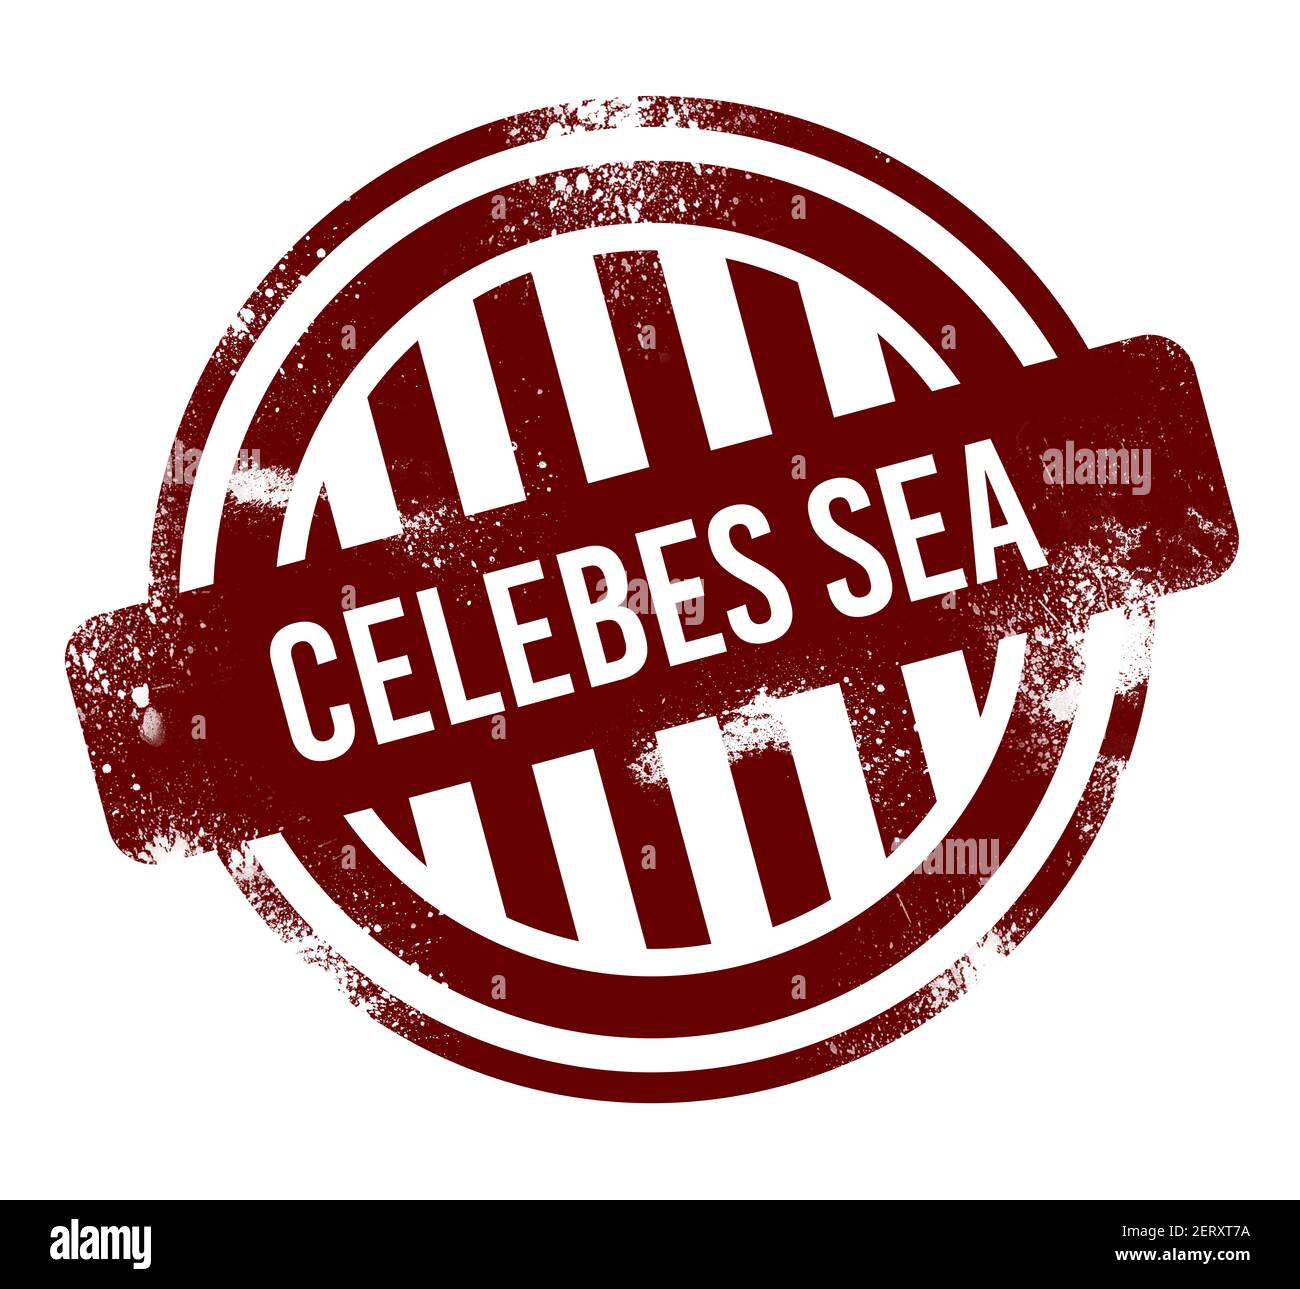 Celebes Sea - red round grunge button, stamp Stock Photo